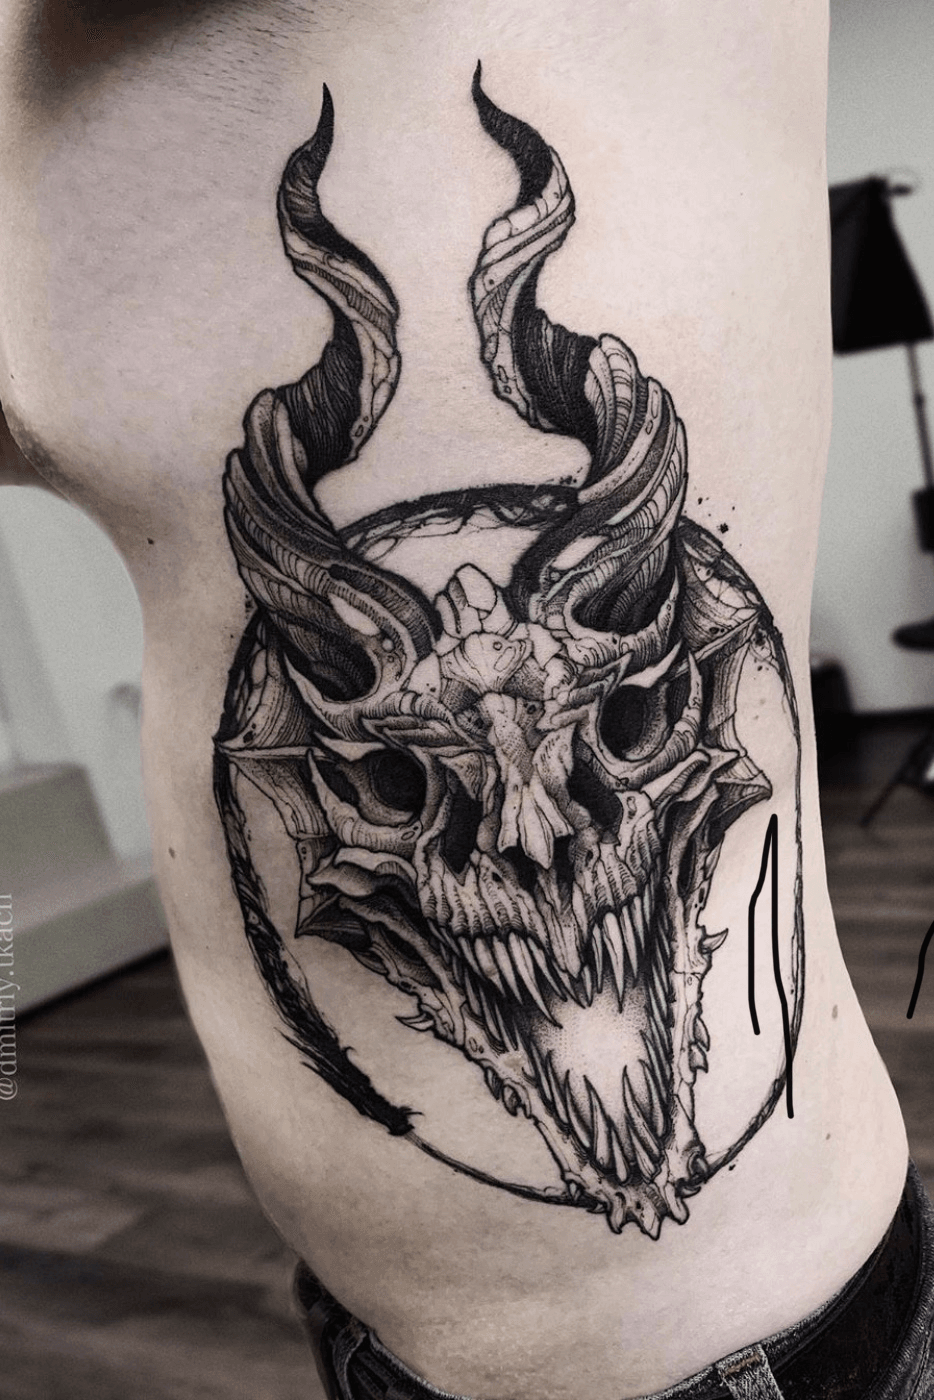 Blackwork style skeleton dragon tattooed on the